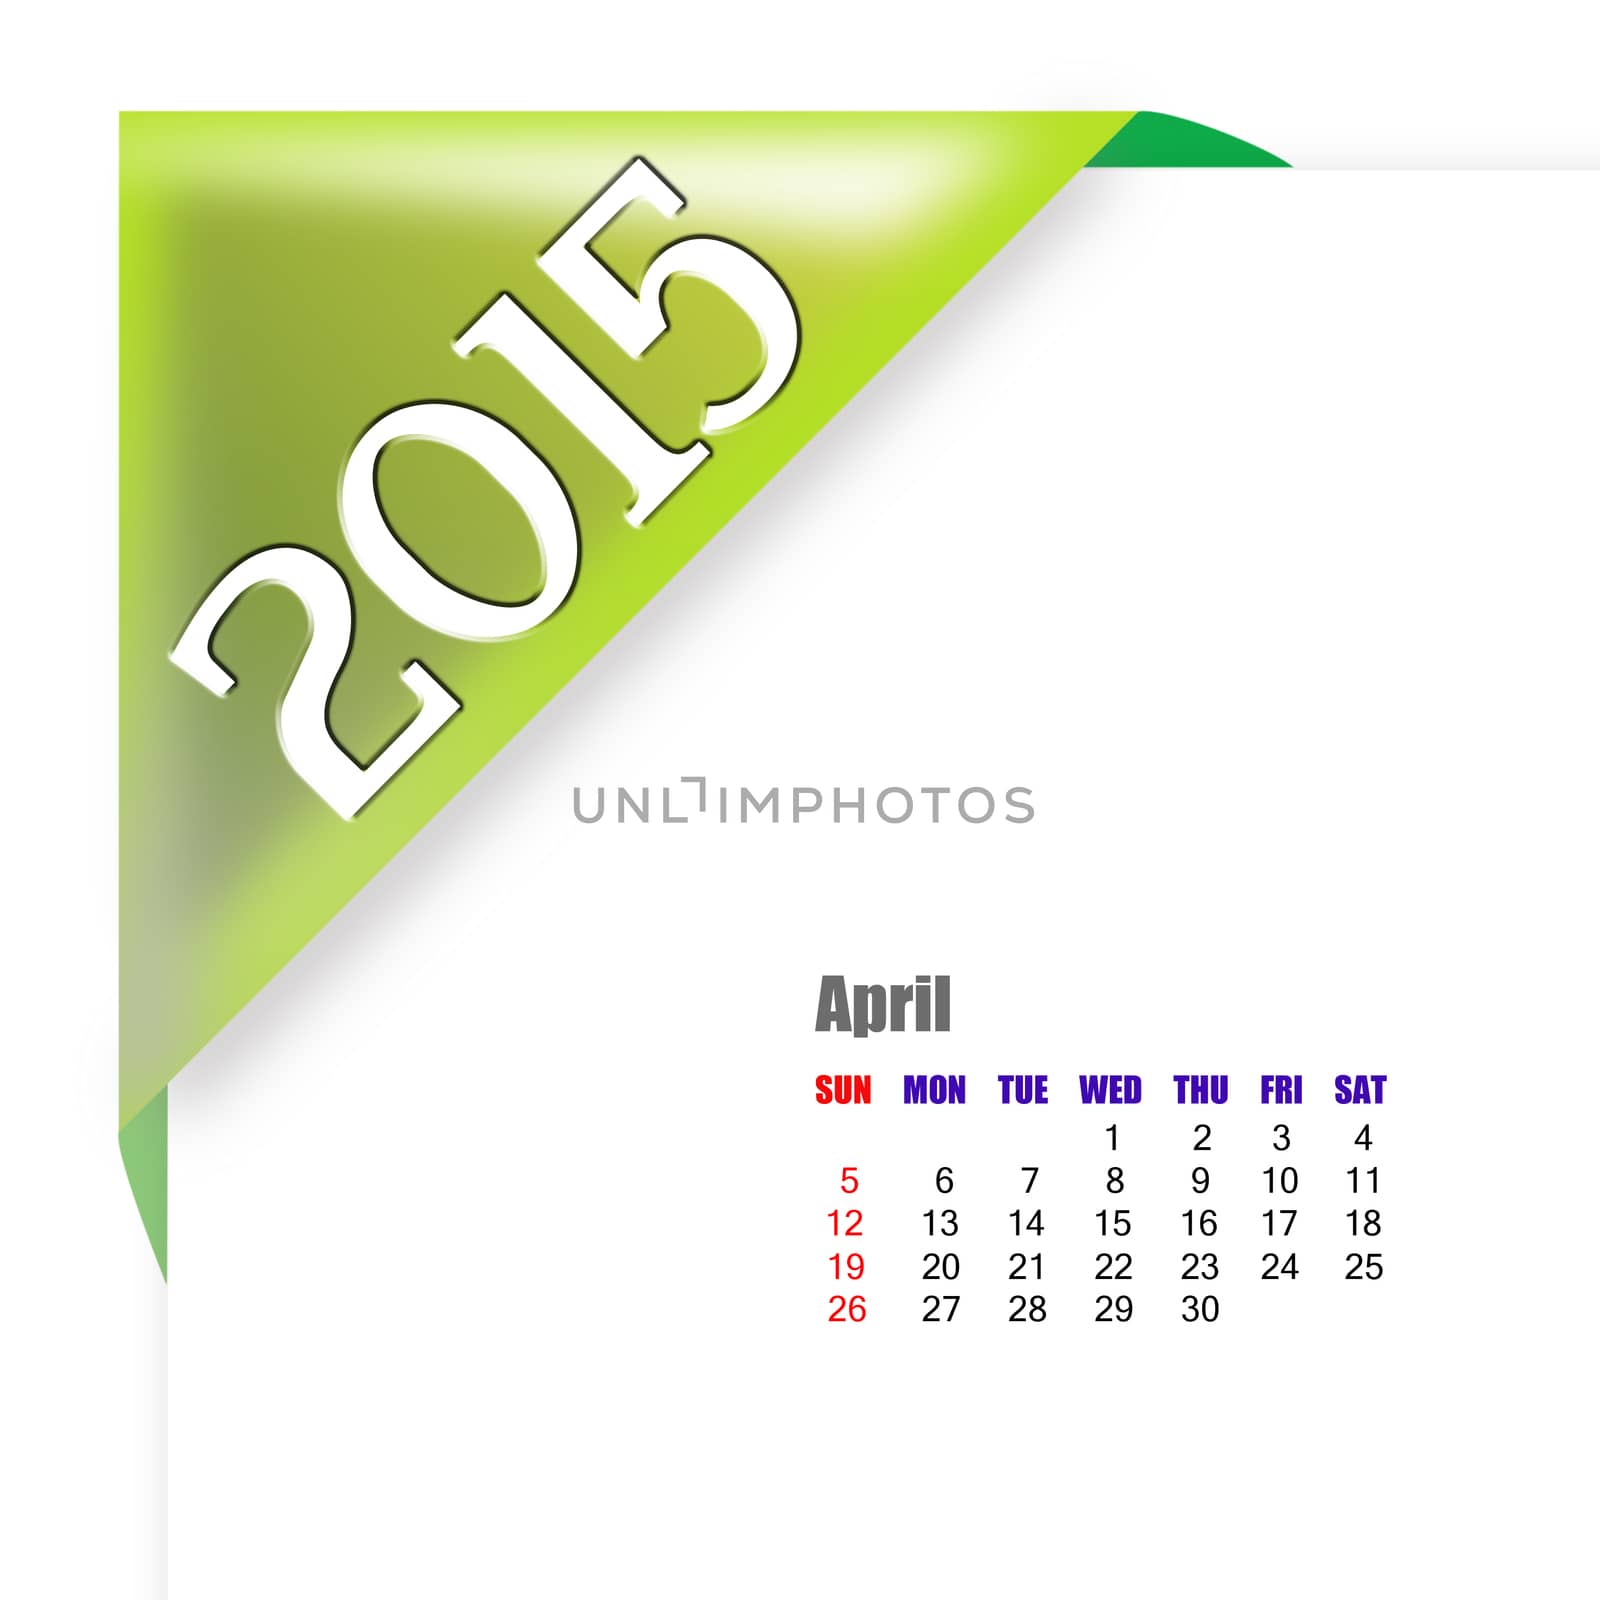 April 2015 - Calendar series with coner fold design